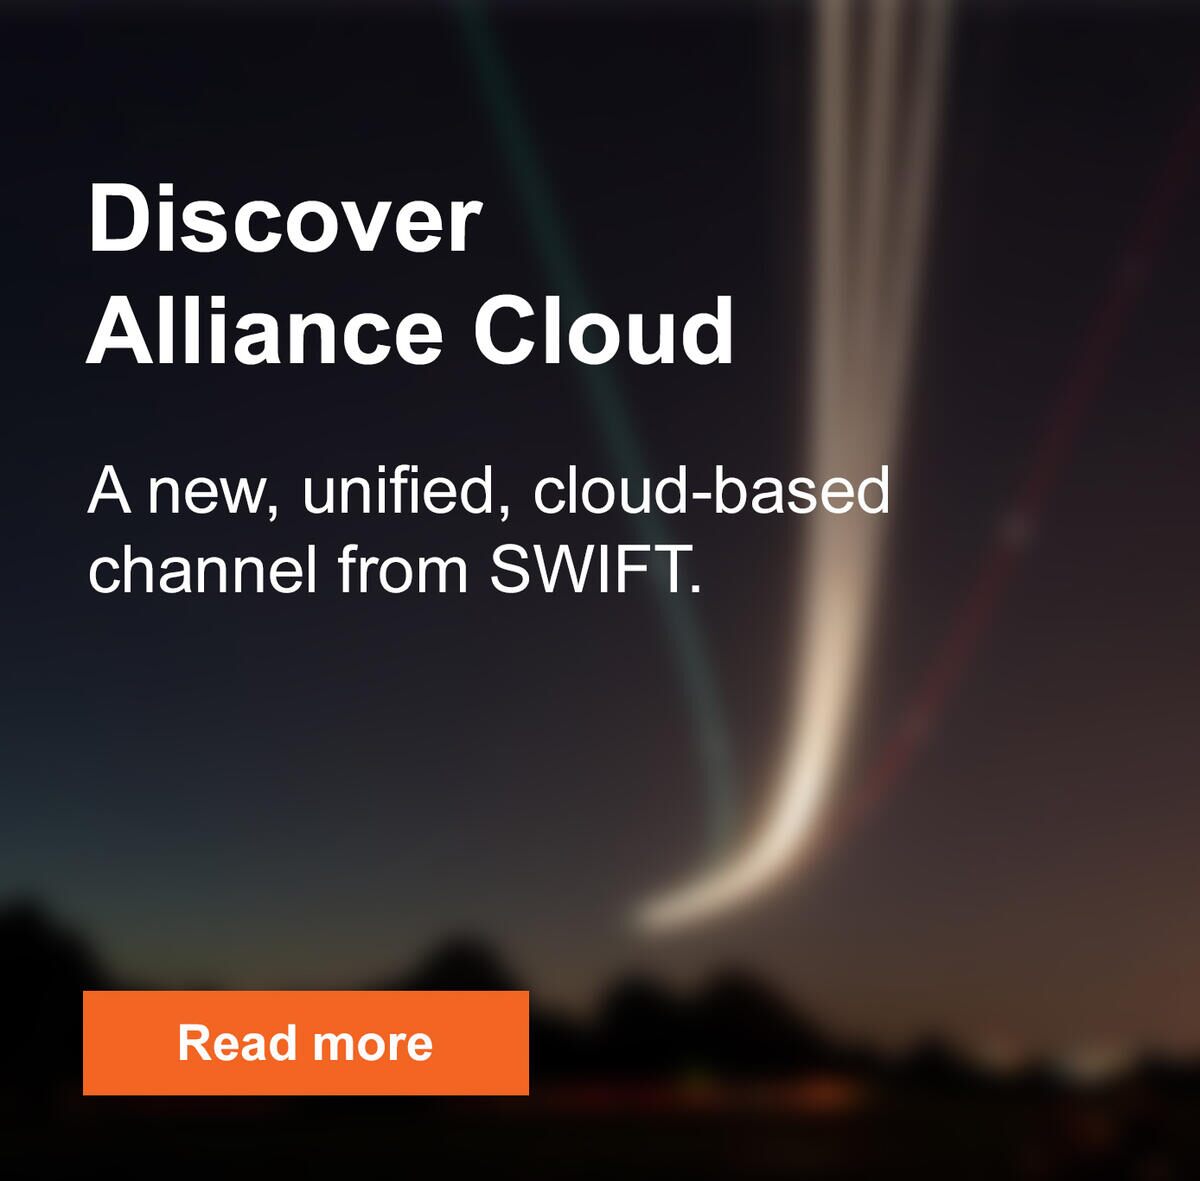 alliance-cloud-image-cta.jpg